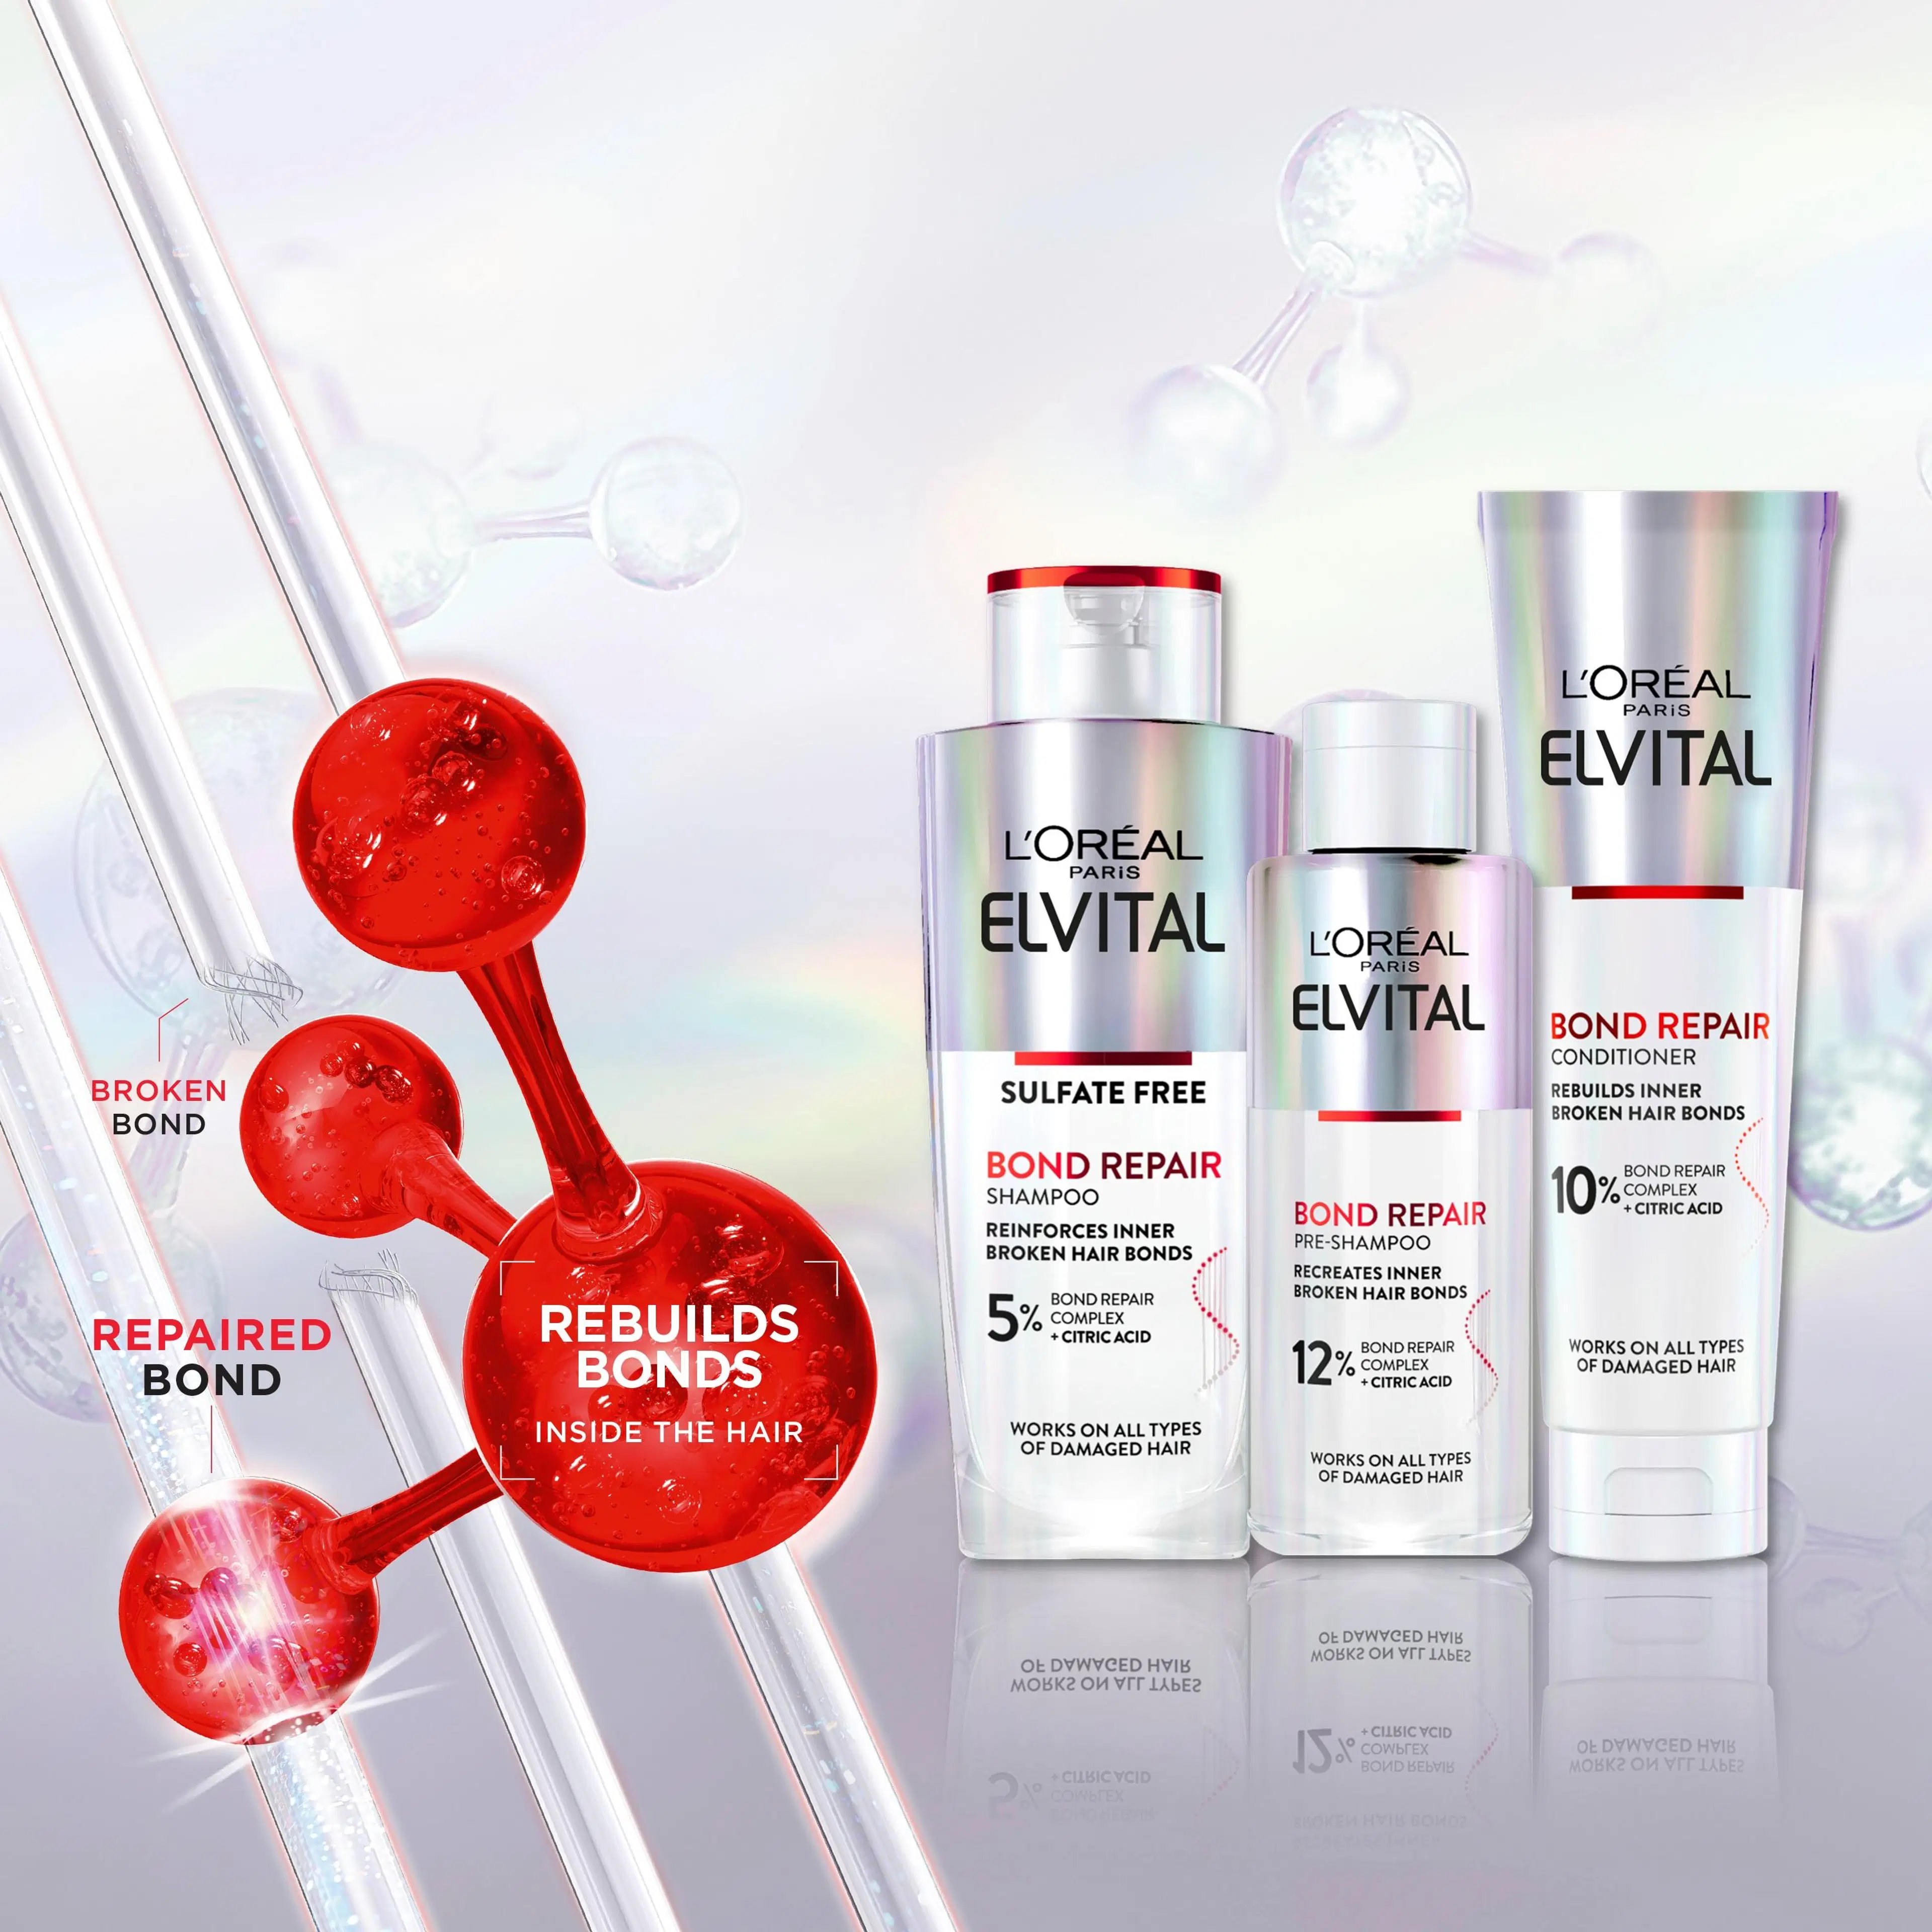 L'Oréal Paris Elvital Bond Repair Pre-Shampoo vaurioituneille hiuksille 200ml